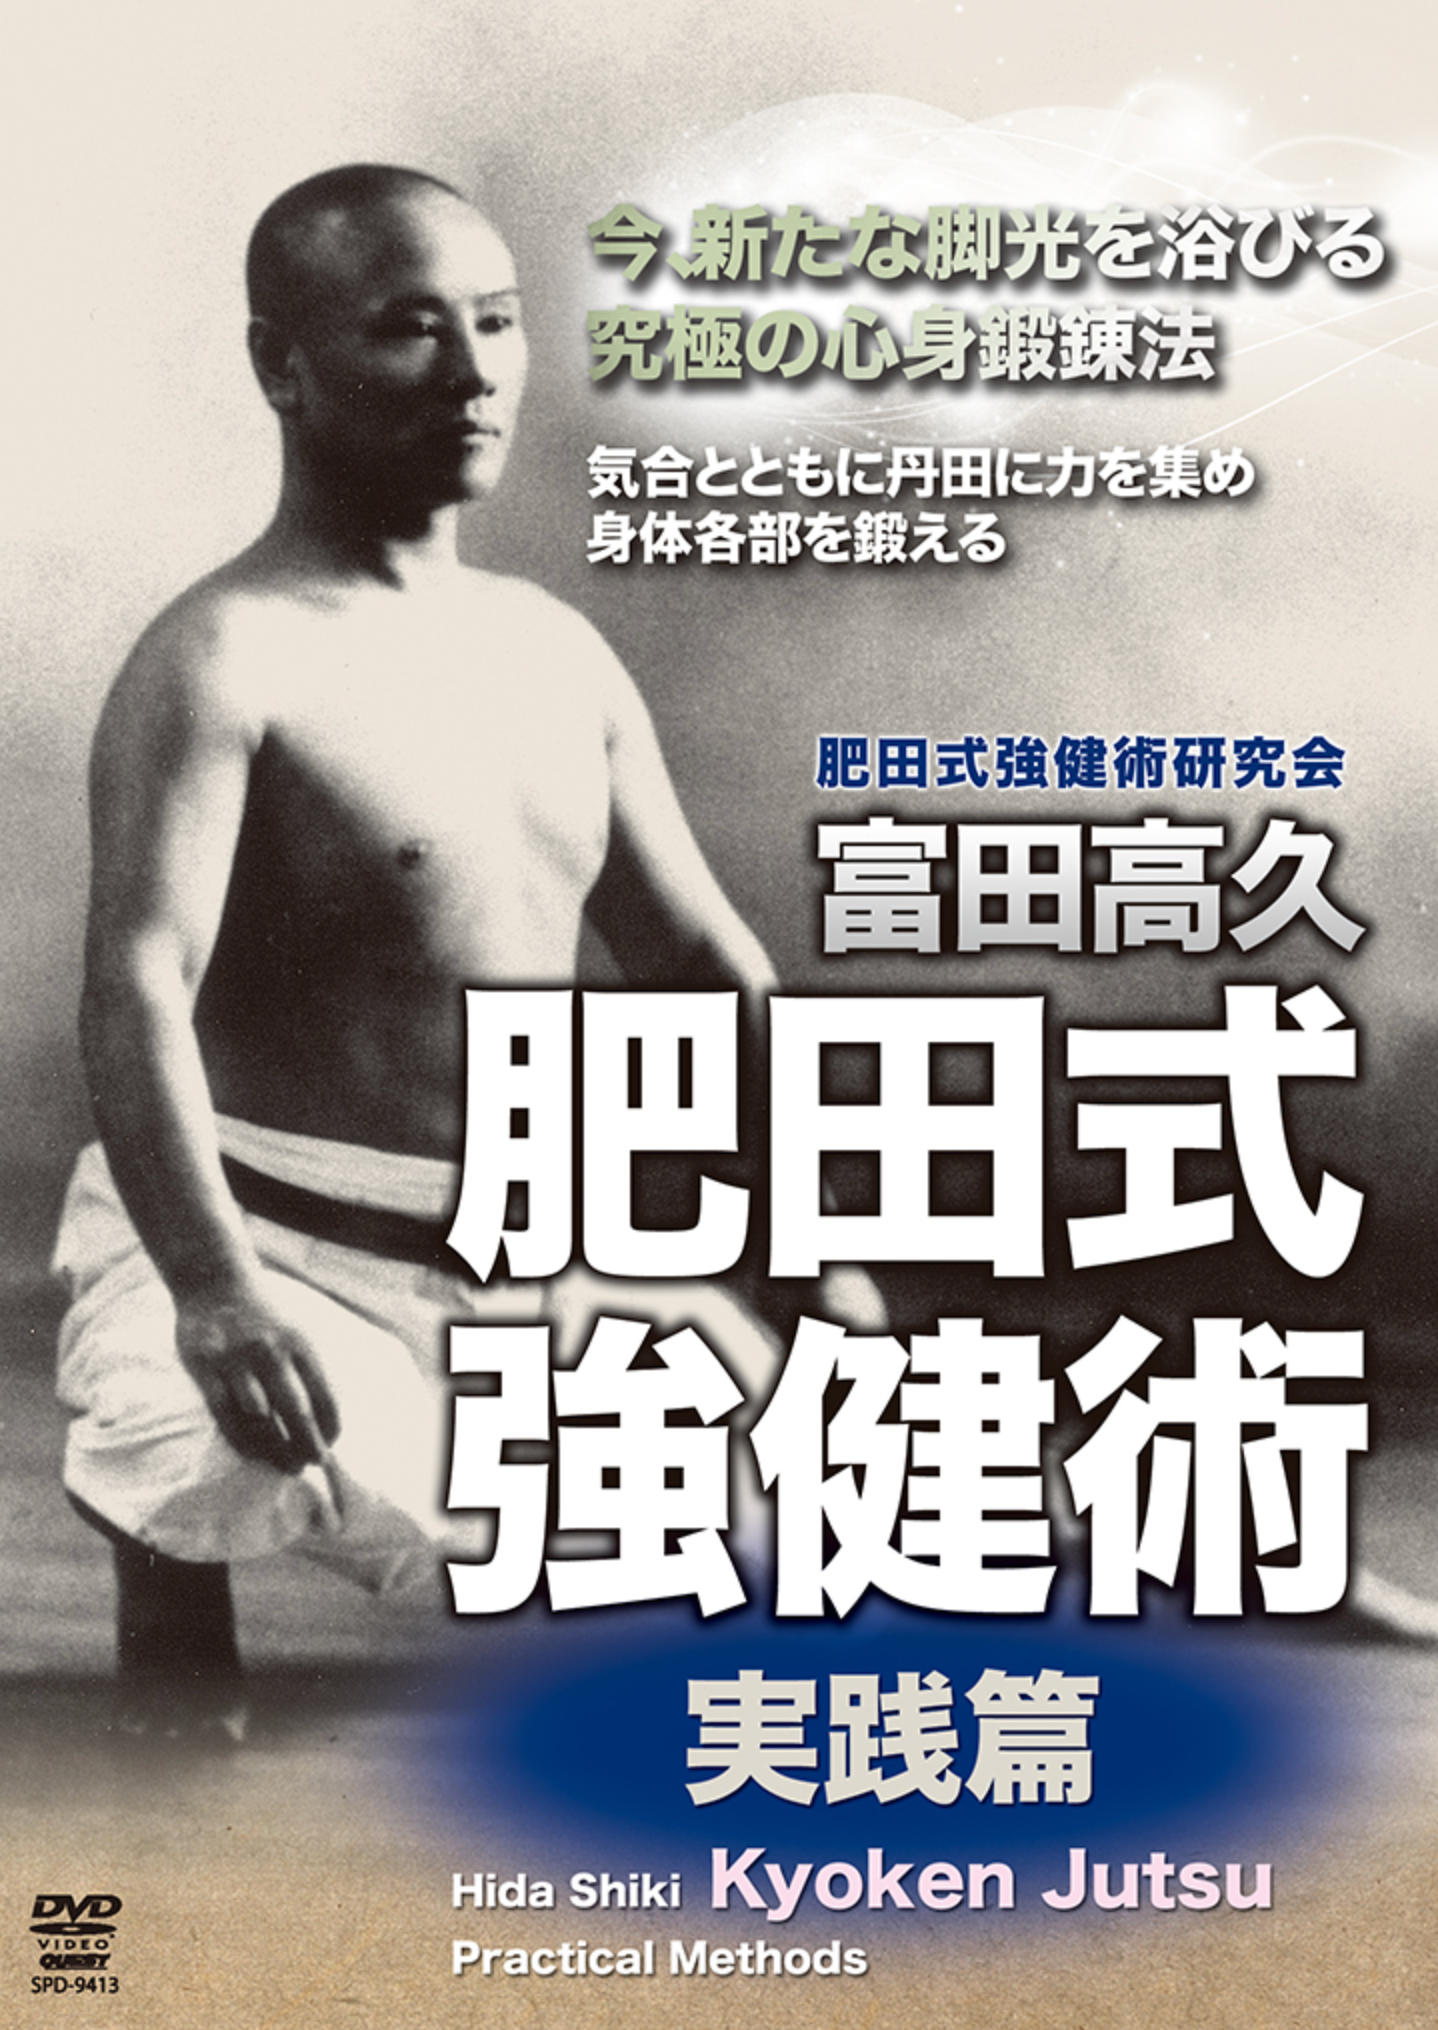 Hida Shiki Kyoken Jutsu Practical Methods DVD by Takahisa Tomita - Budovideos Inc